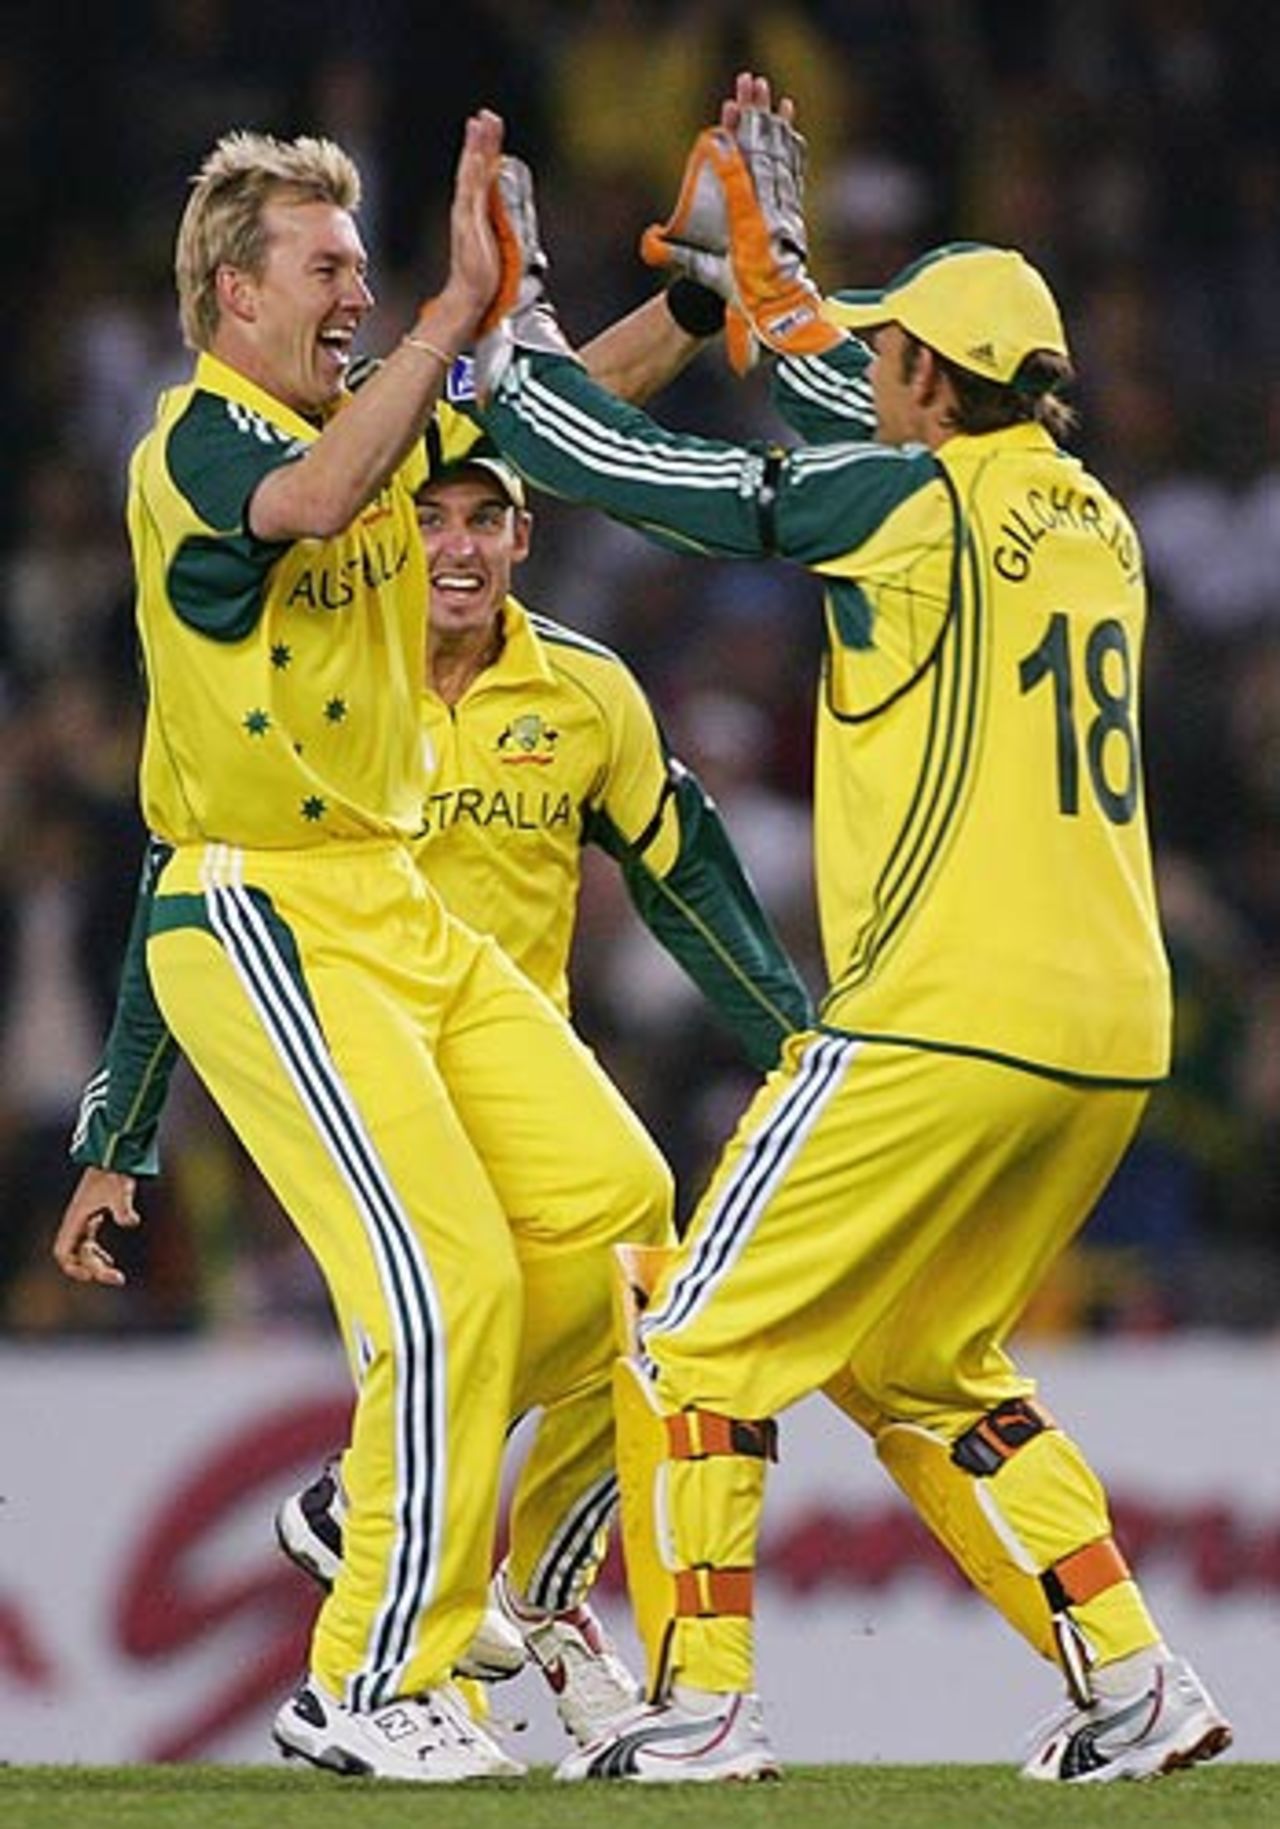 Brett Lee celebrates bowling Chris Gayle off the second ball, Australia v World XI, 3rd ODI, Super Series, Melbourne, October 9, 2005